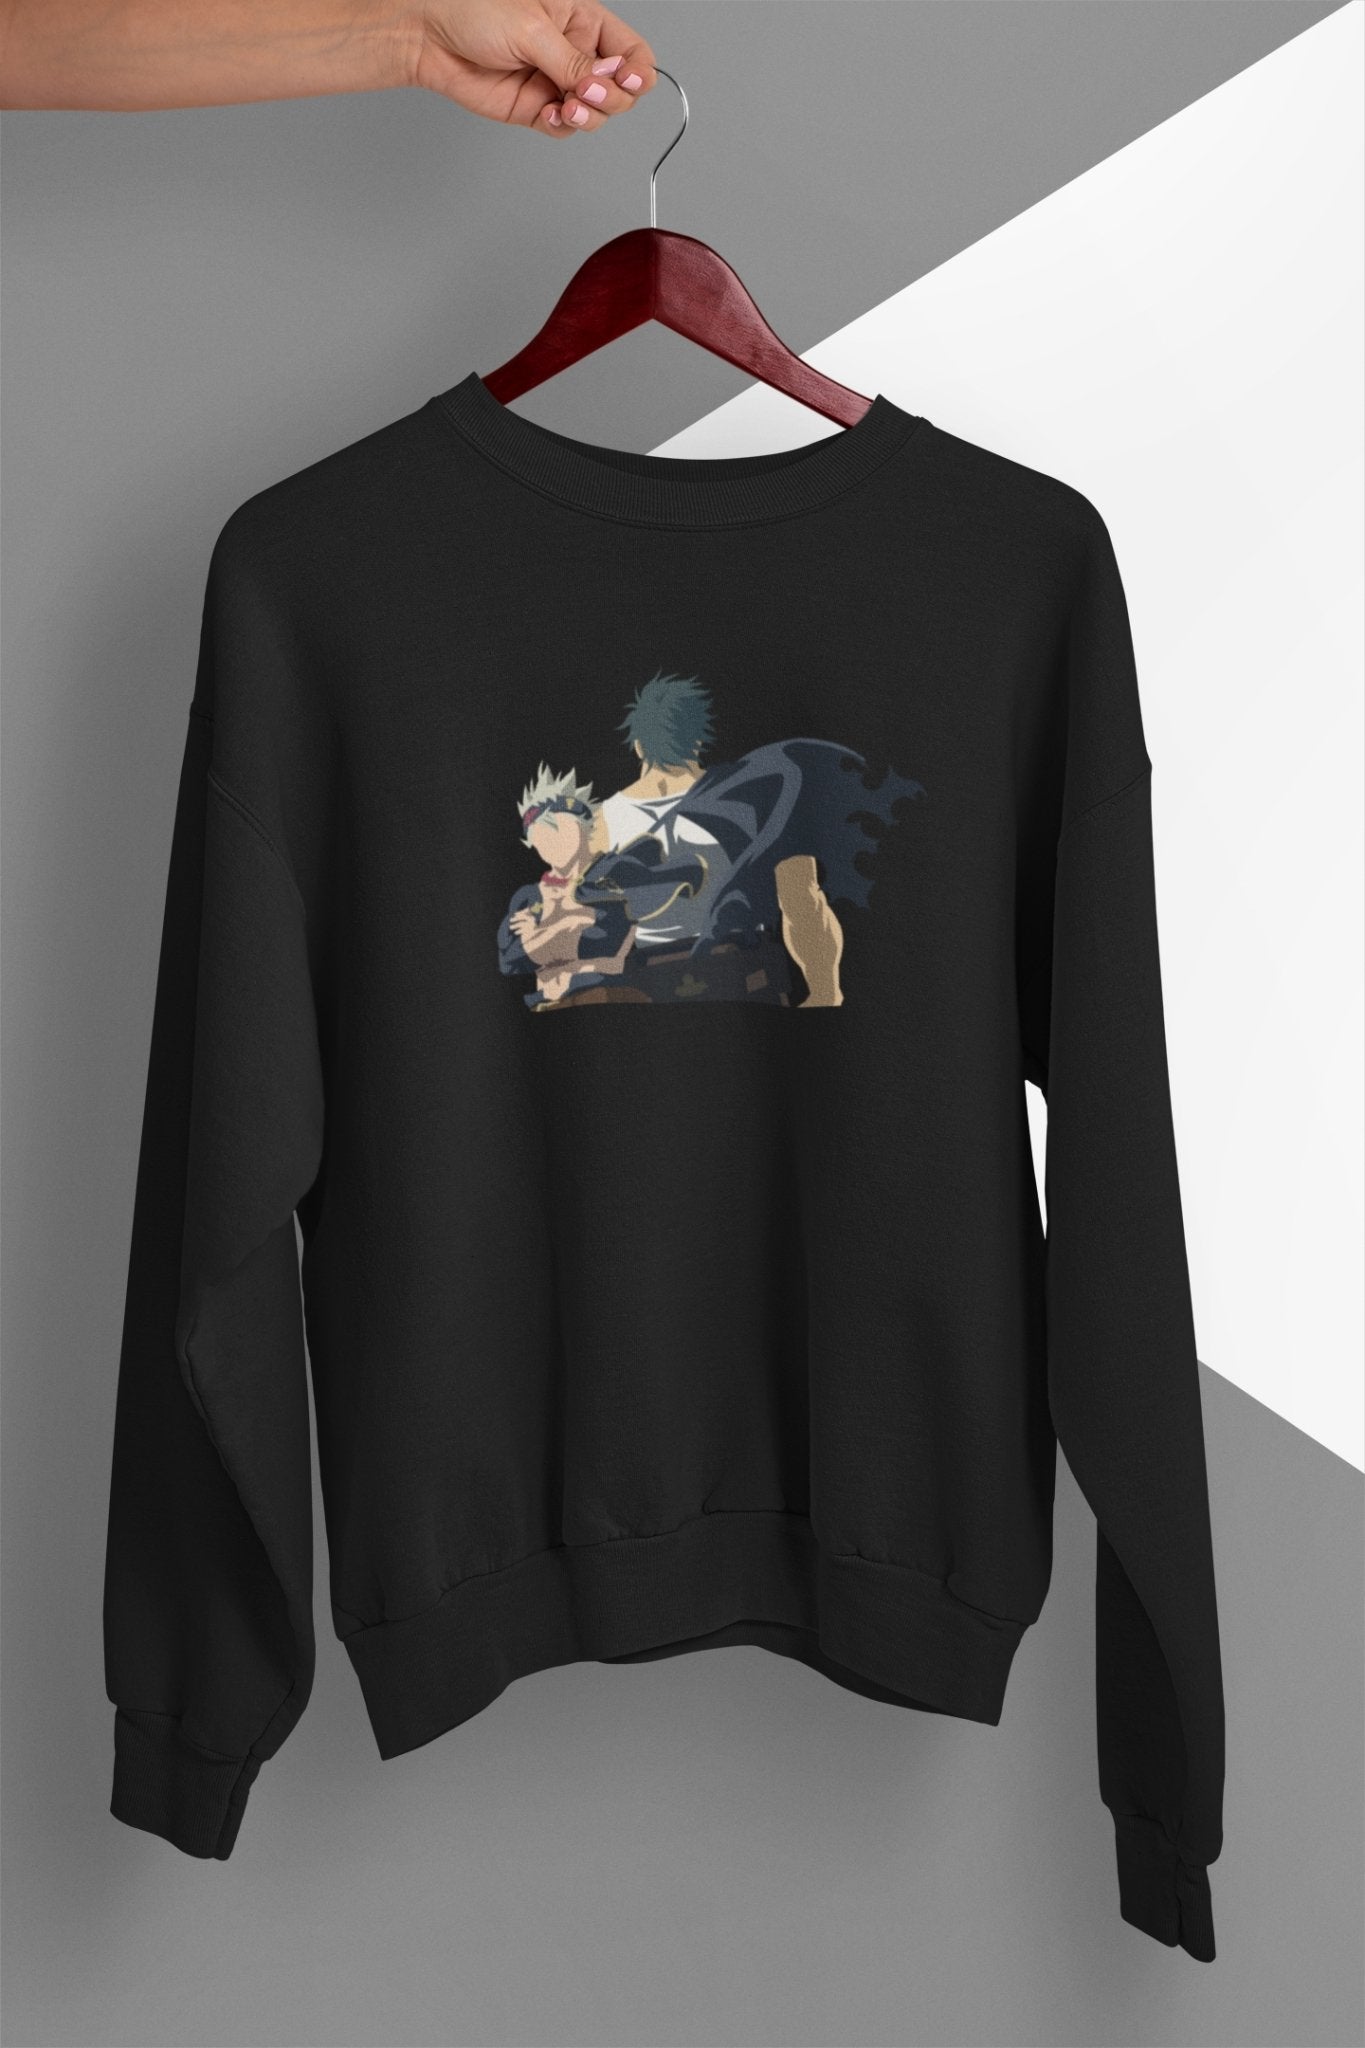 Asta and Yami Black Clover Anime Crewneck Sweatshirt - One Punch Fits